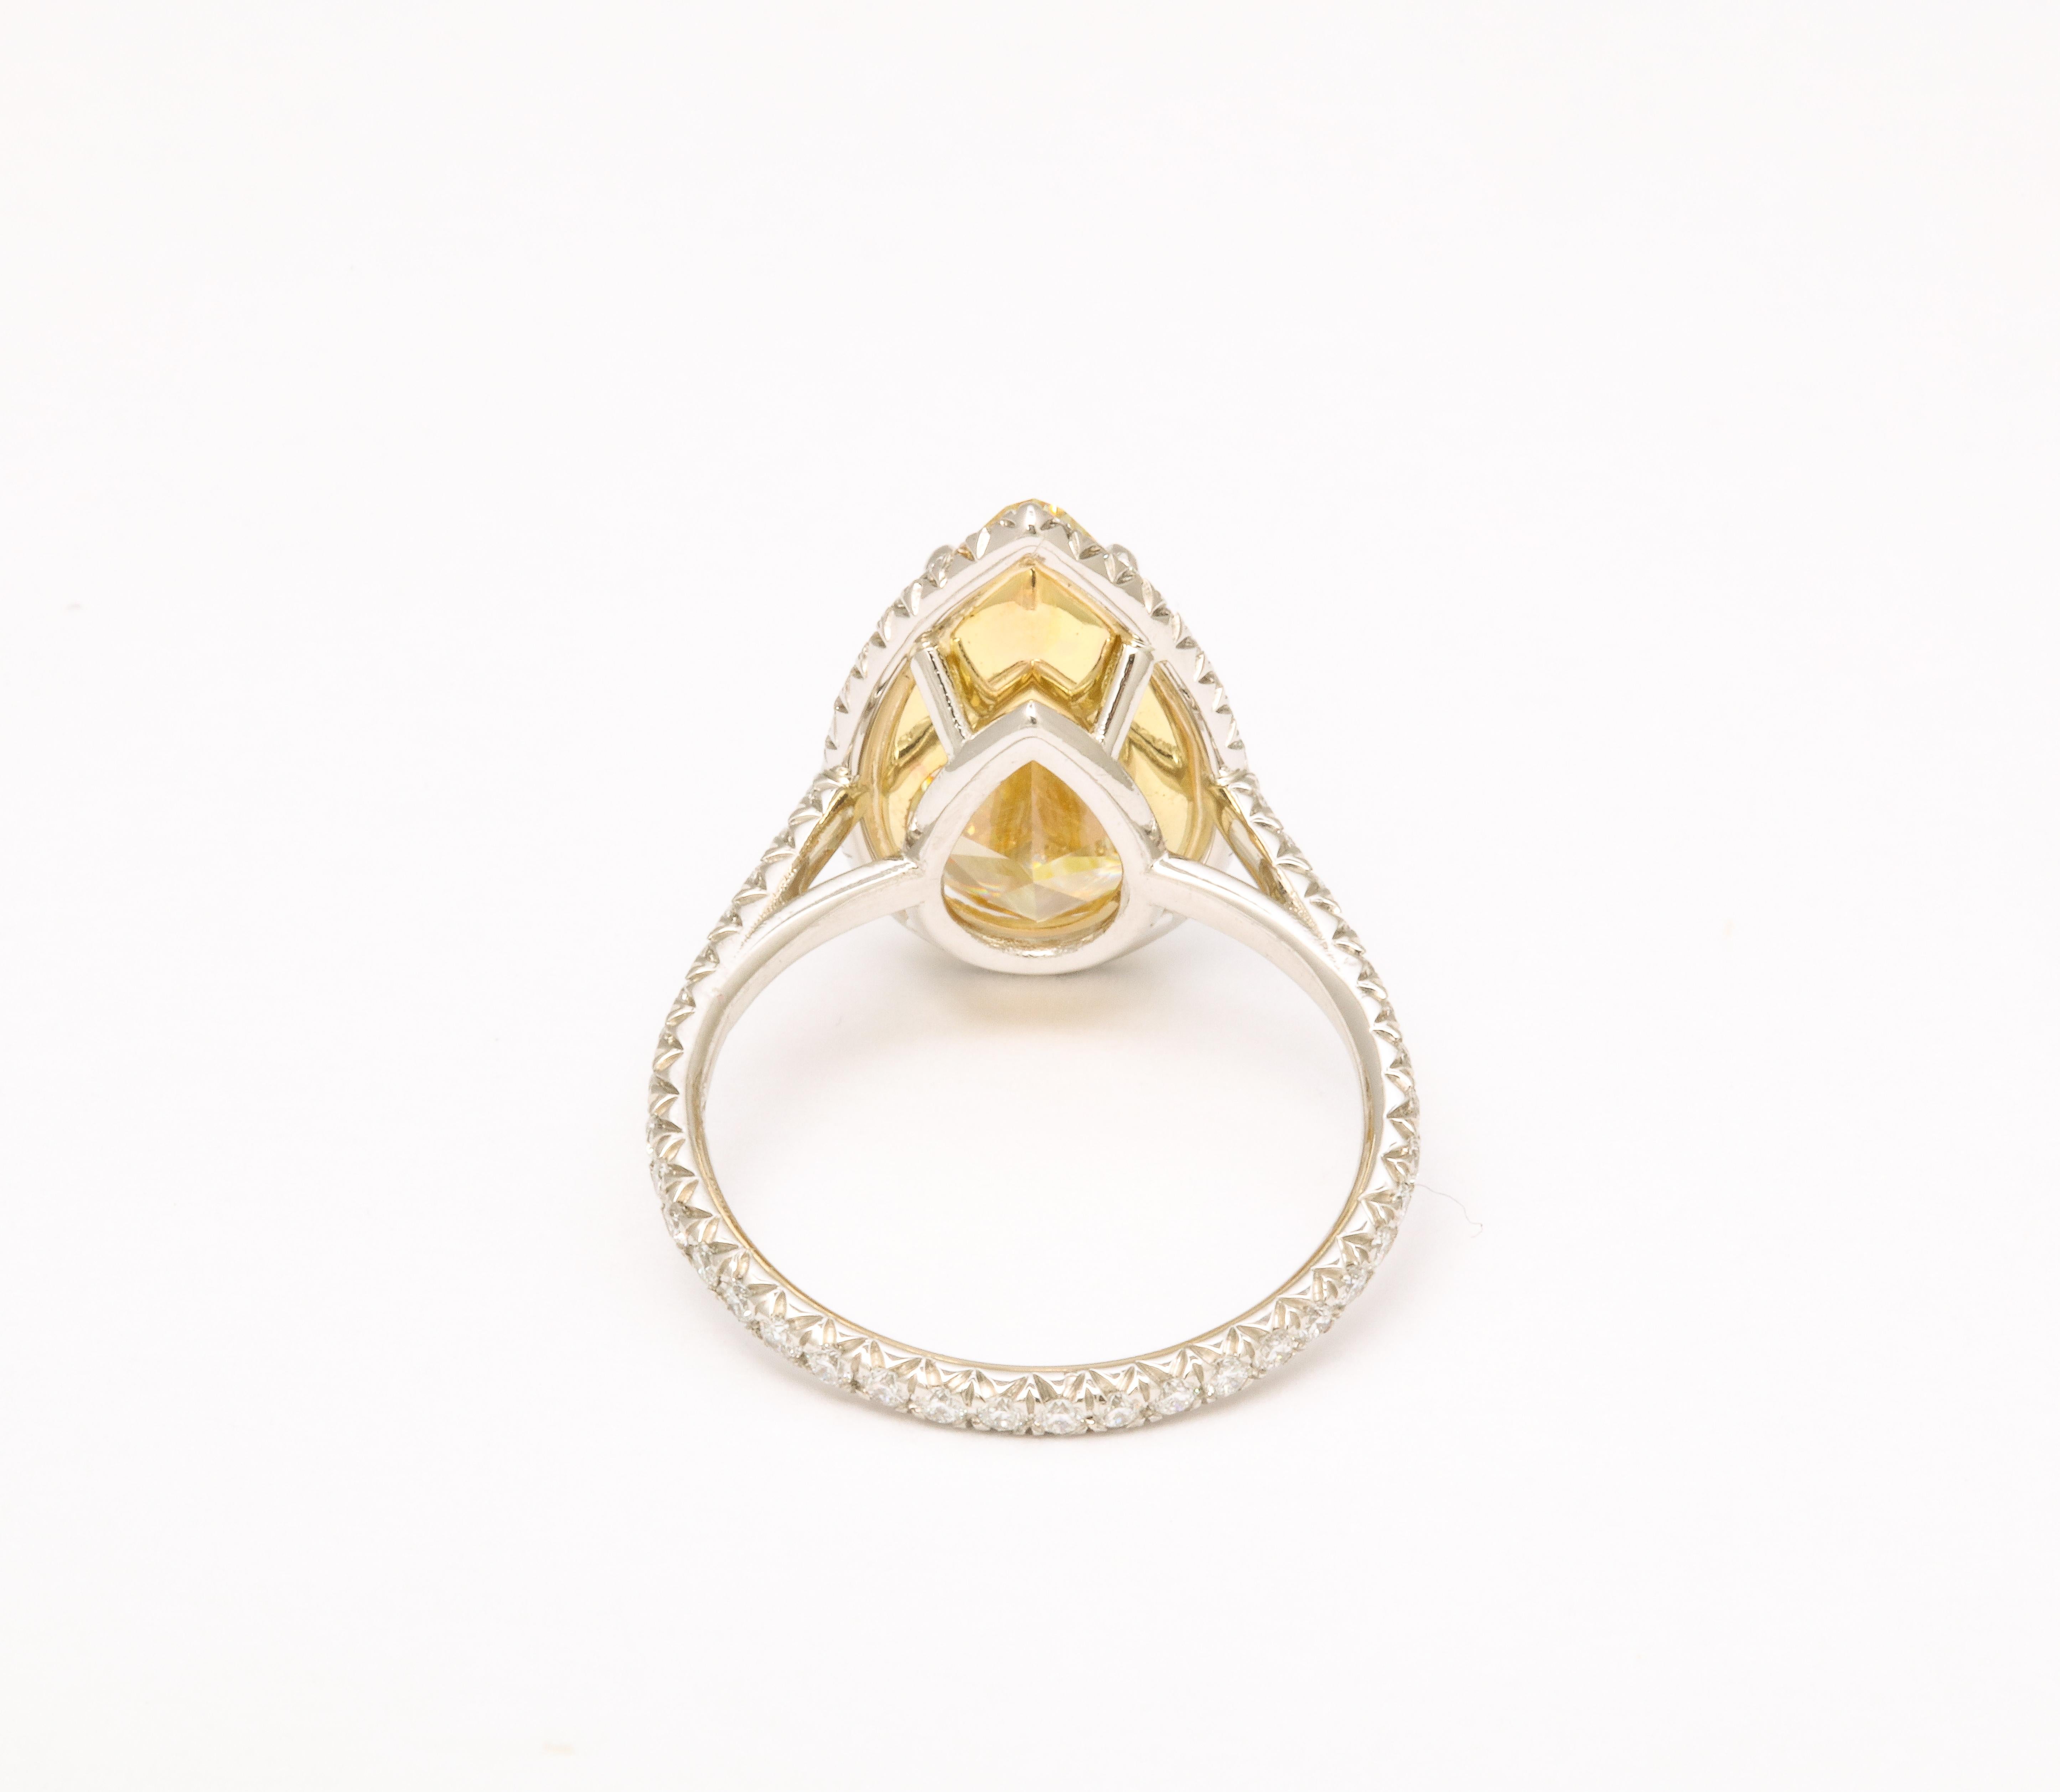 5 carat diamond ring pear shape